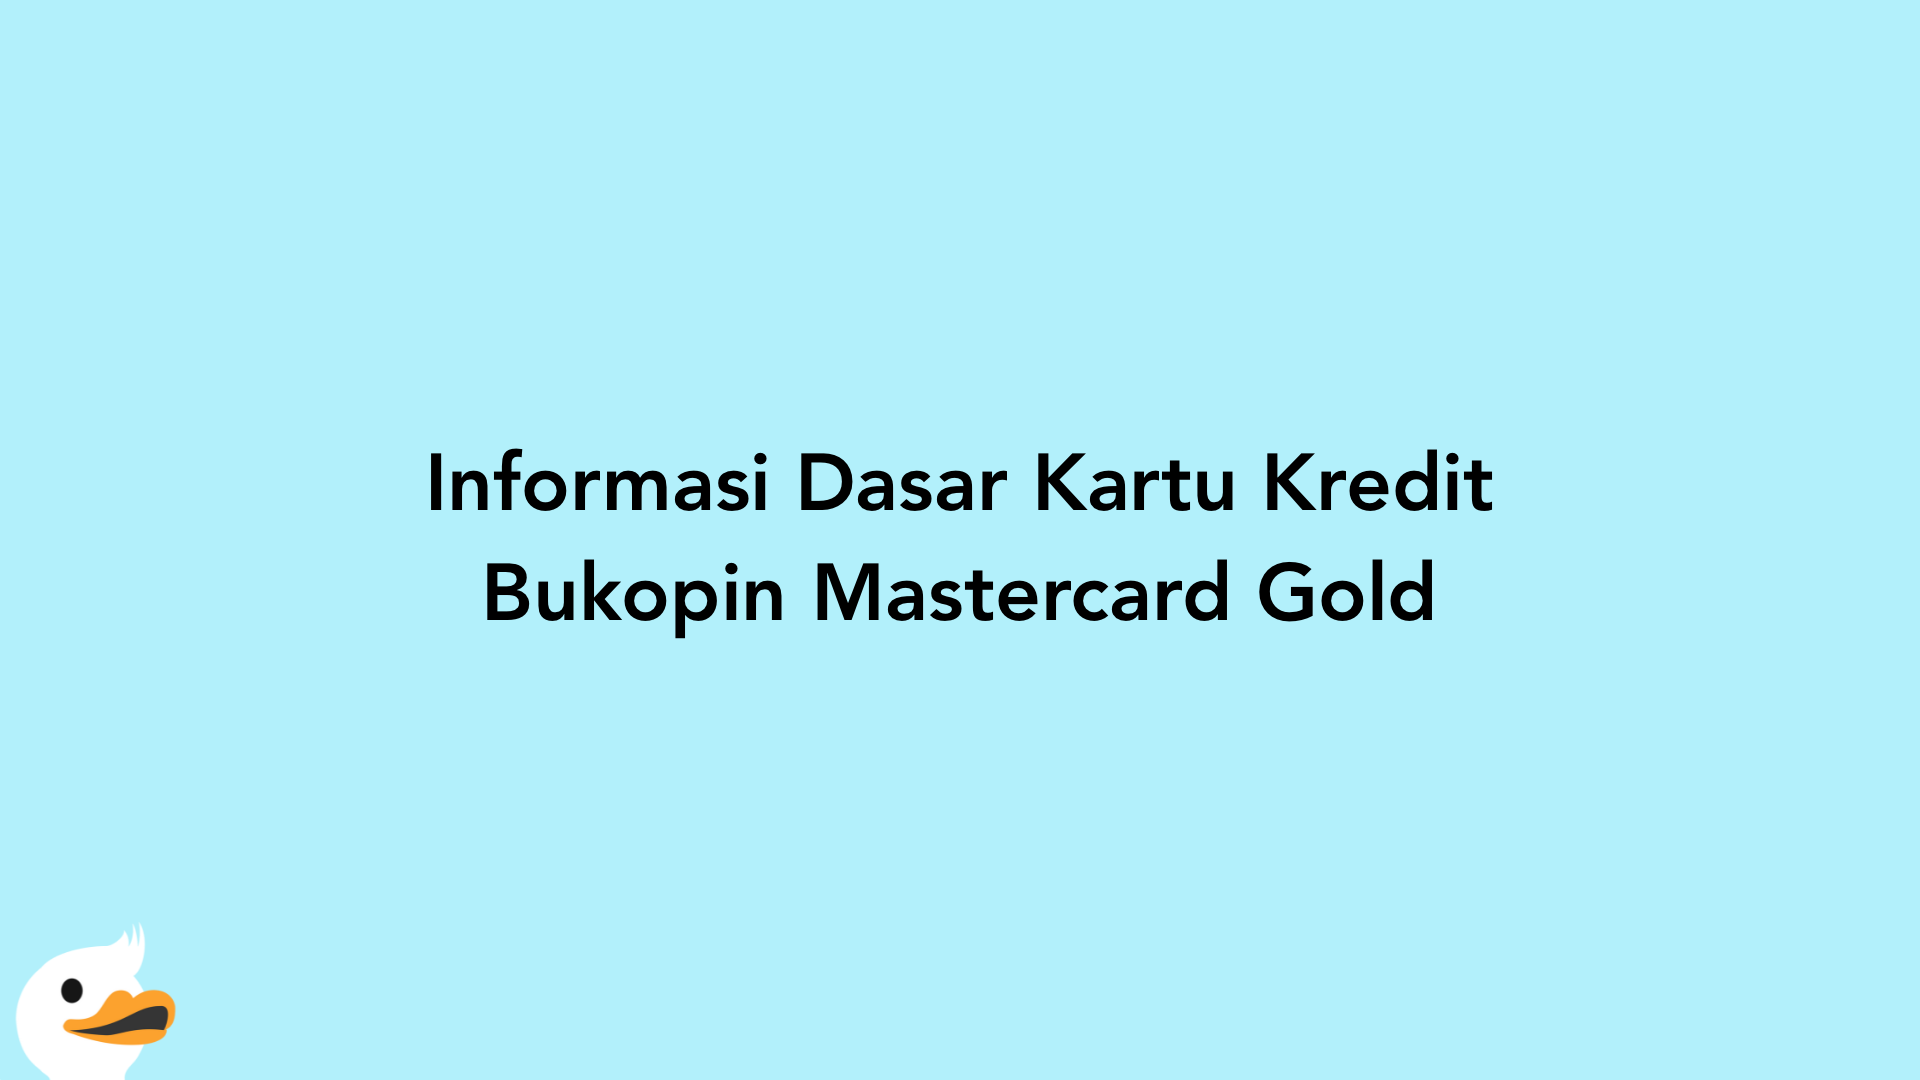 Informasi Dasar Kartu Kredit Bukopin Mastercard Gold